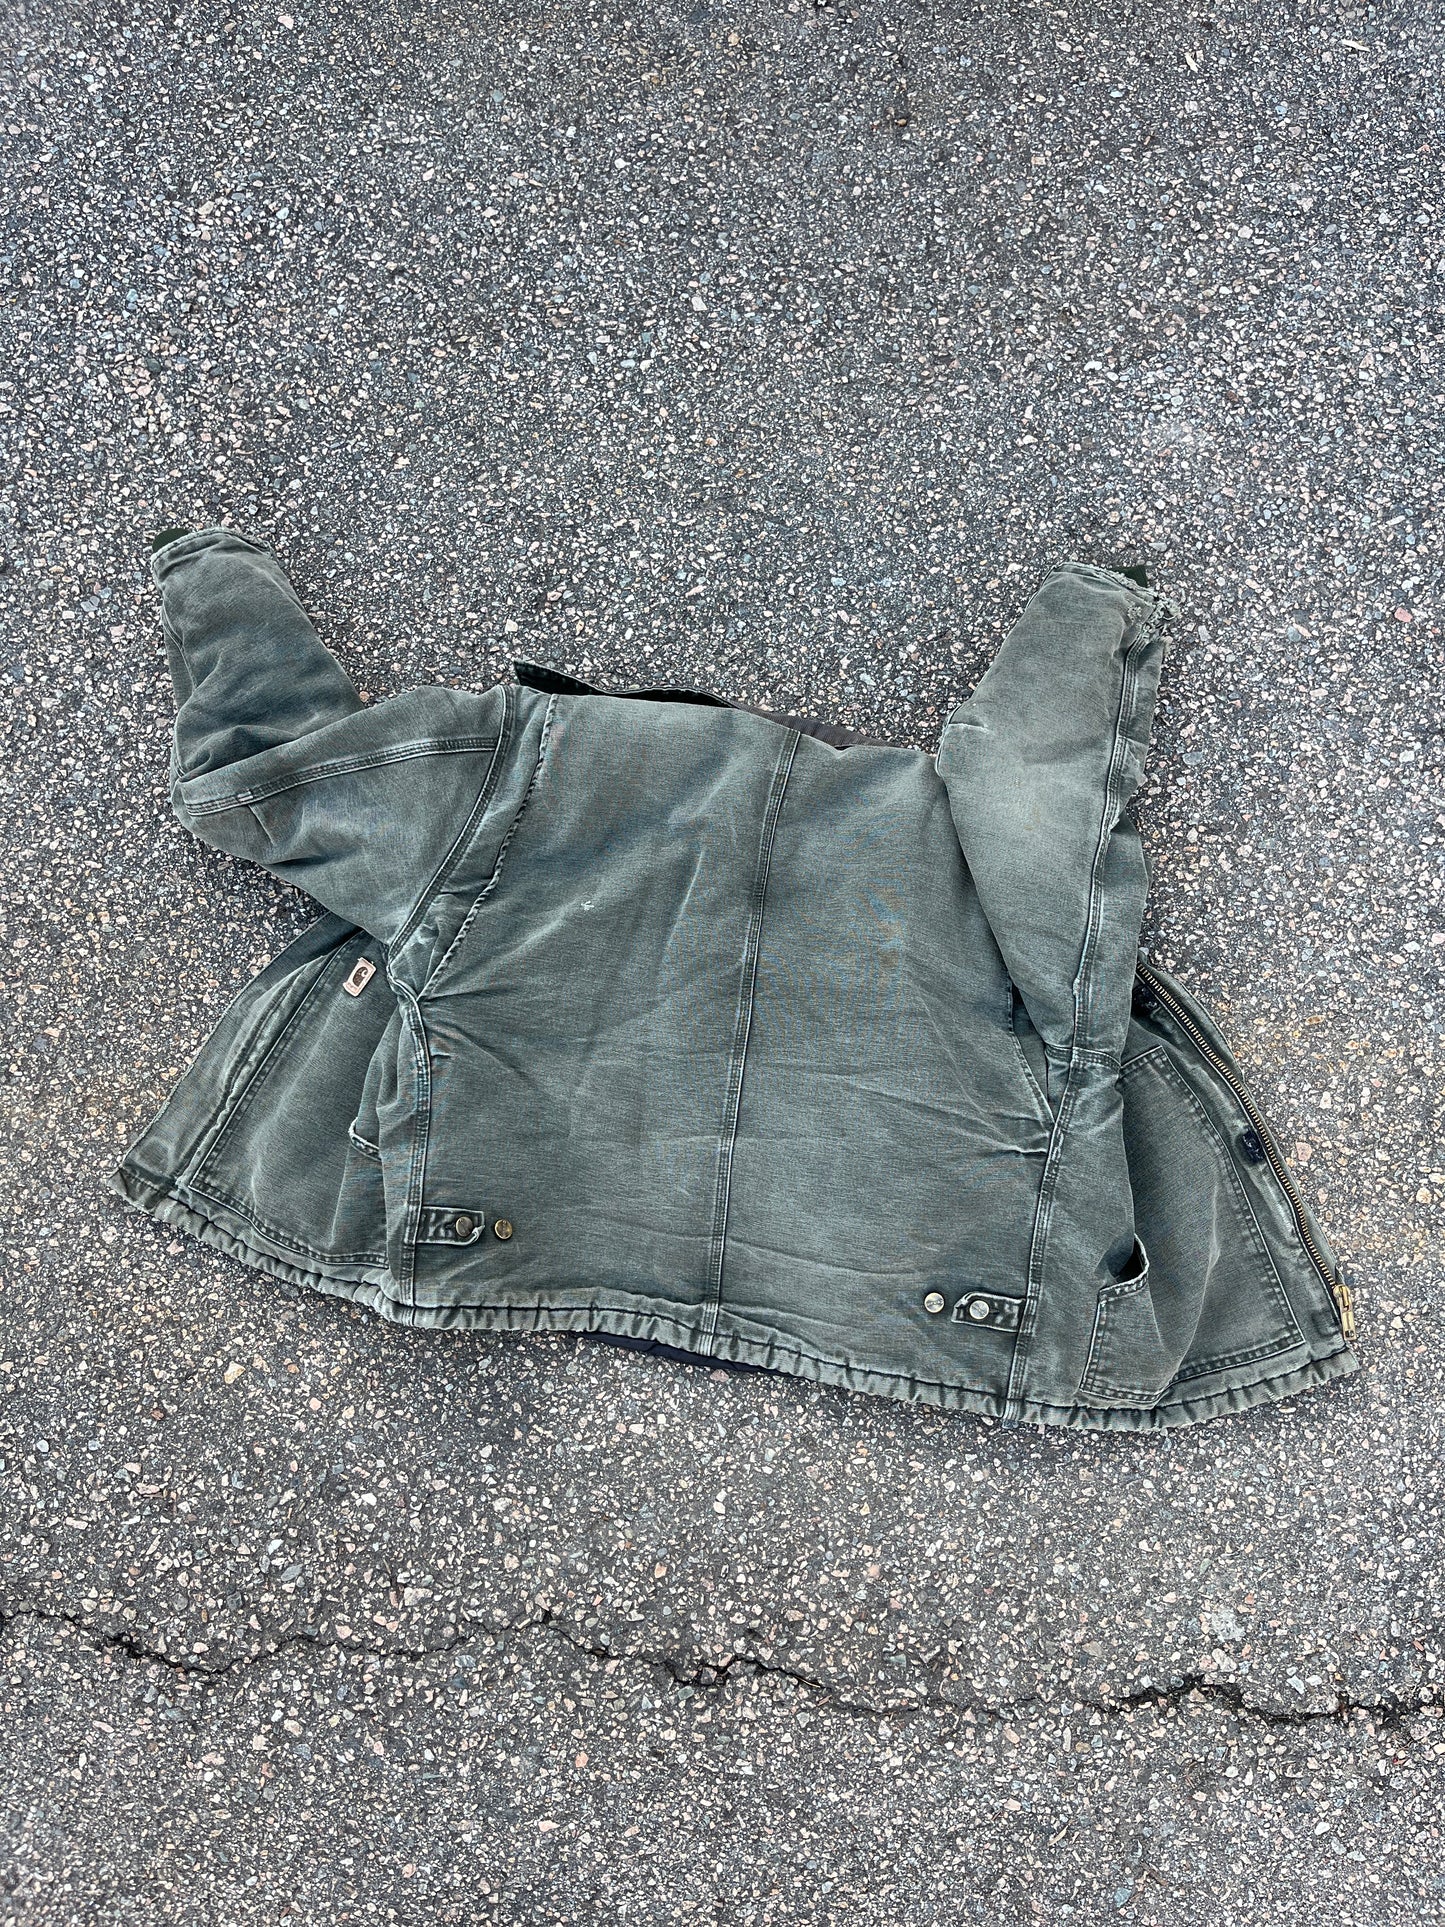 Faded Olive Green Carhartt Arctic Jacket - Medium